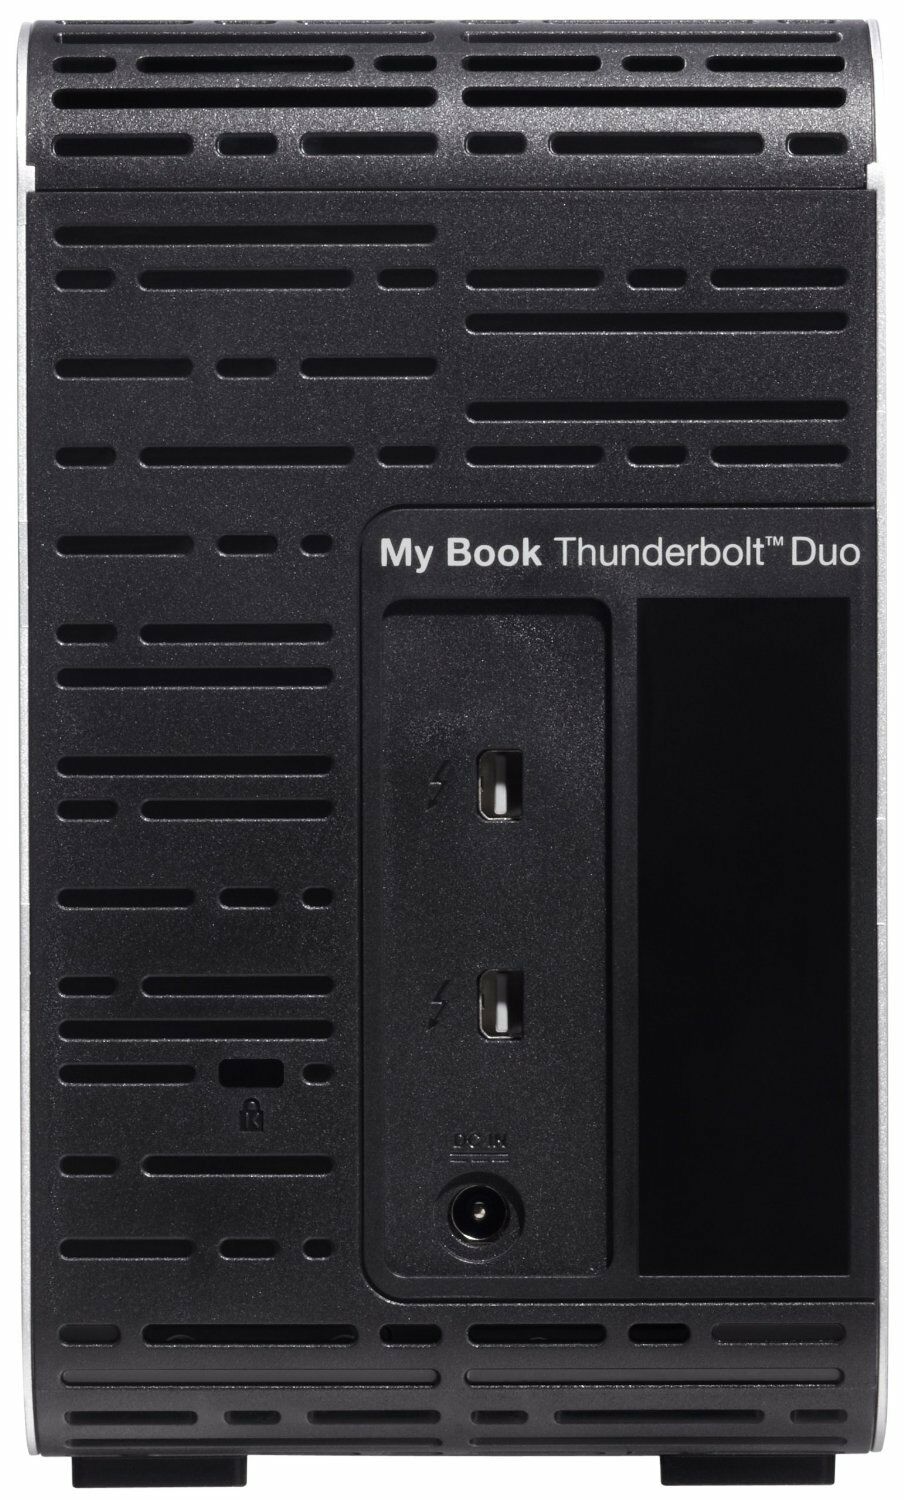 WD My Book 8TB RAID Thunderbolt Duo Dual-Drive External Hard Drive WDBUSK0080JSL